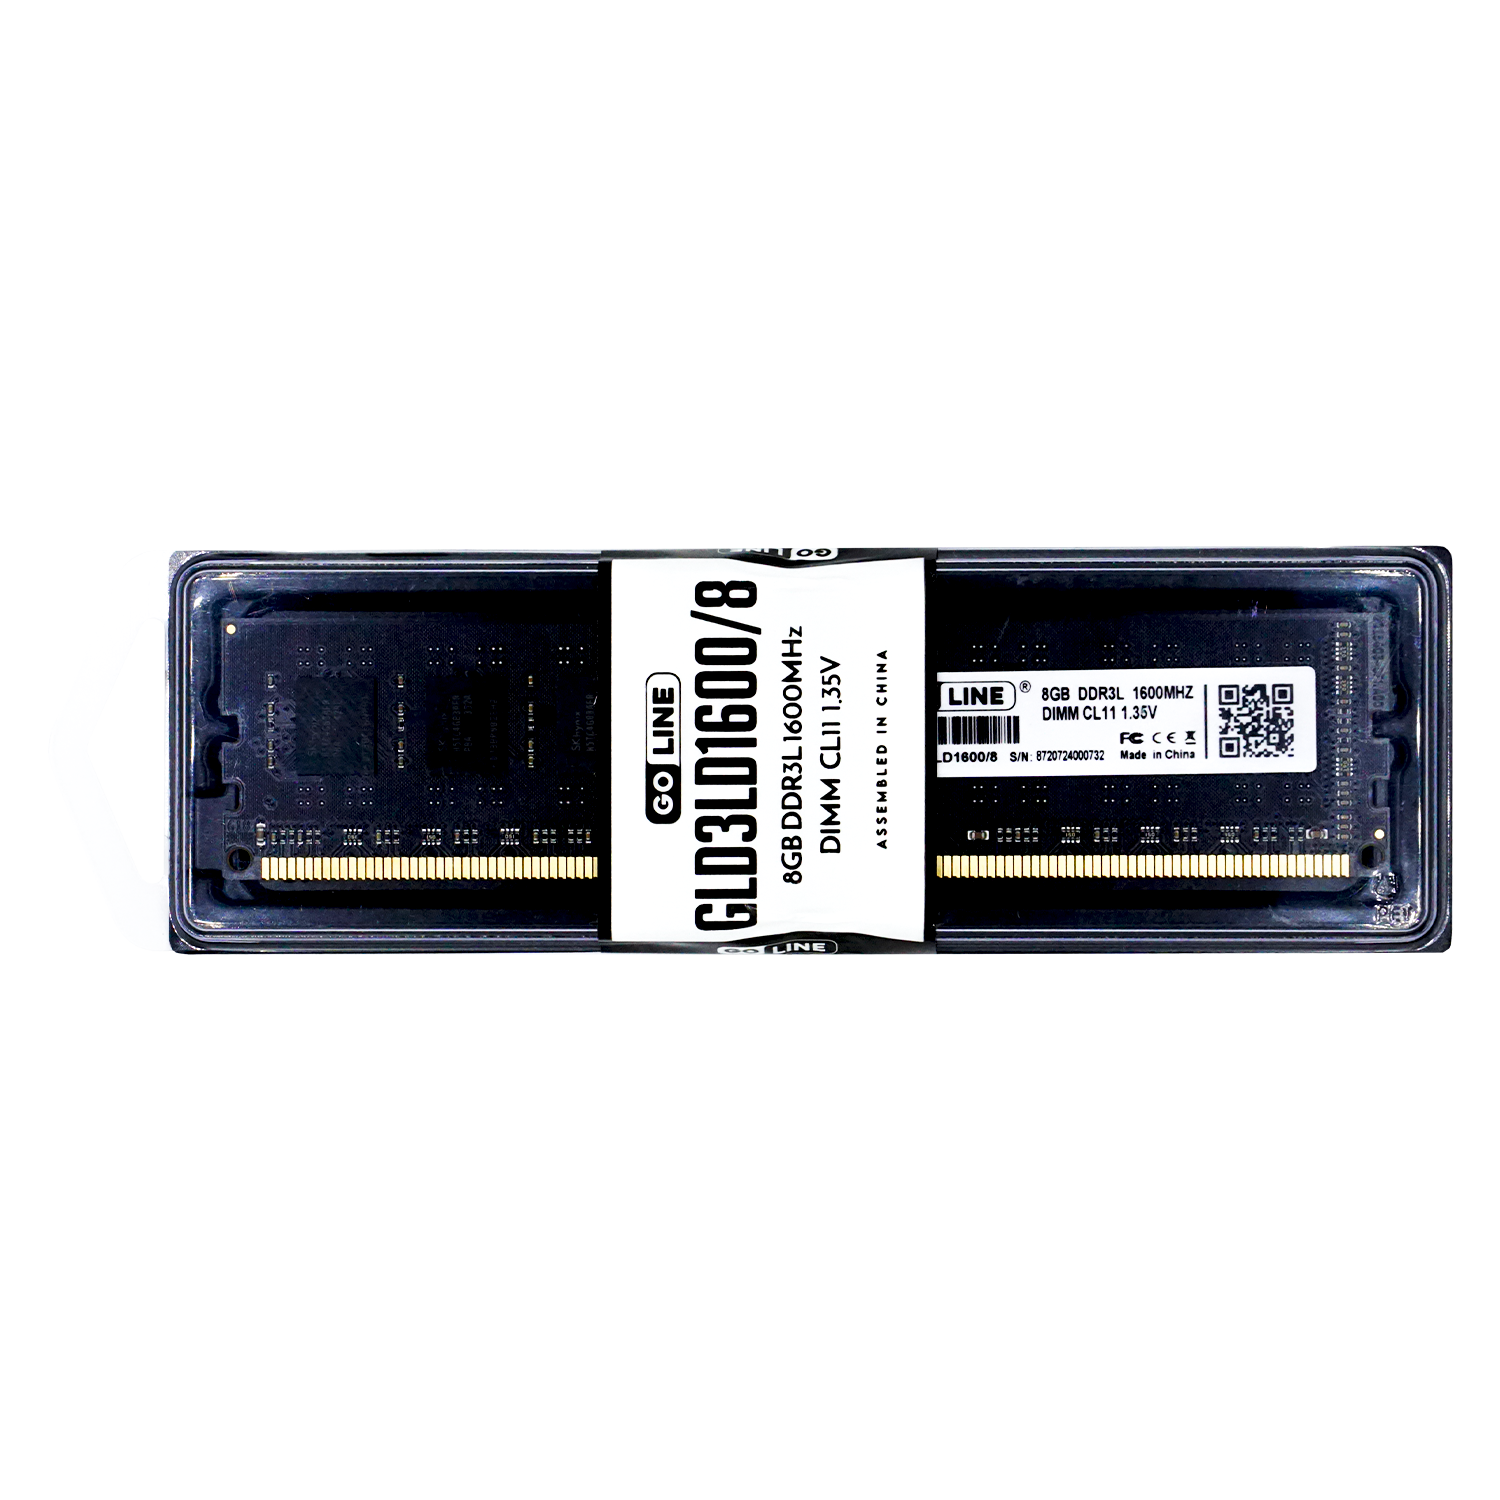 Memória RAM Goline 8GB / DDR3L / 1600MHz - (GLD3LD1600/8)